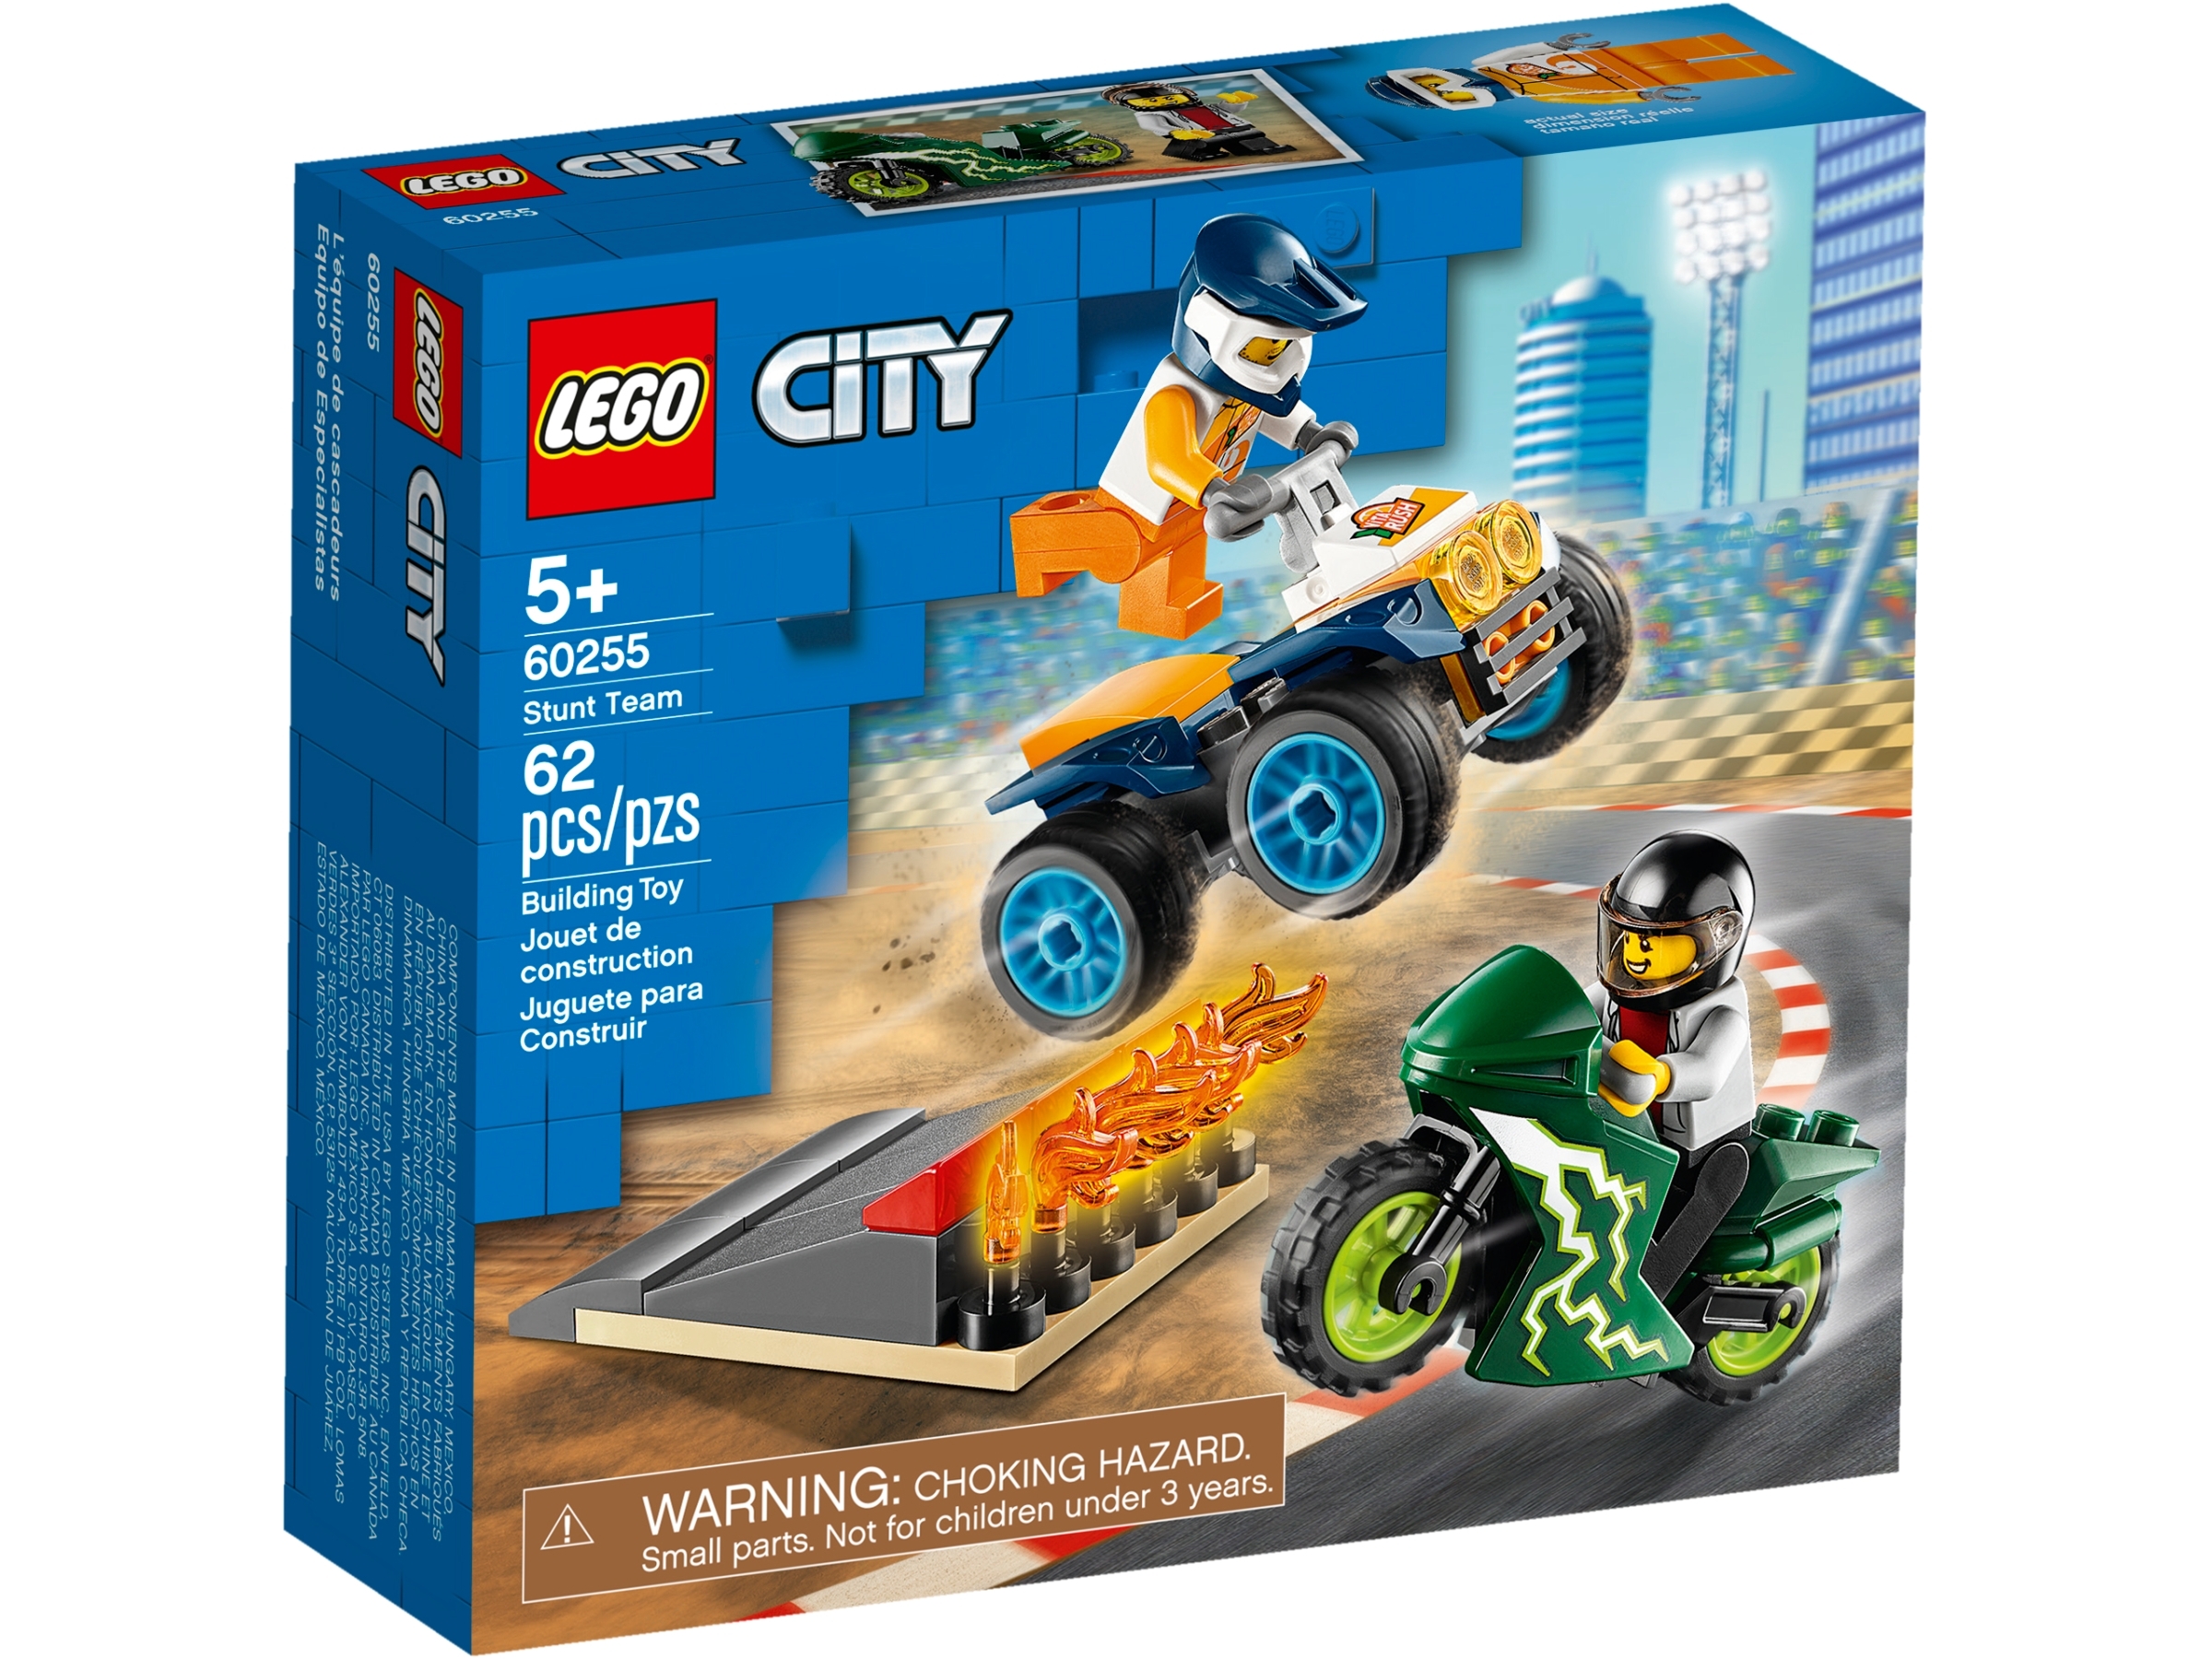 LEGO City Zum Bauen | Lego City 60255 Playmobil, Lego & Co. Kinder Spielzeug Zum Bauen Playmobil, Lego & Co. 